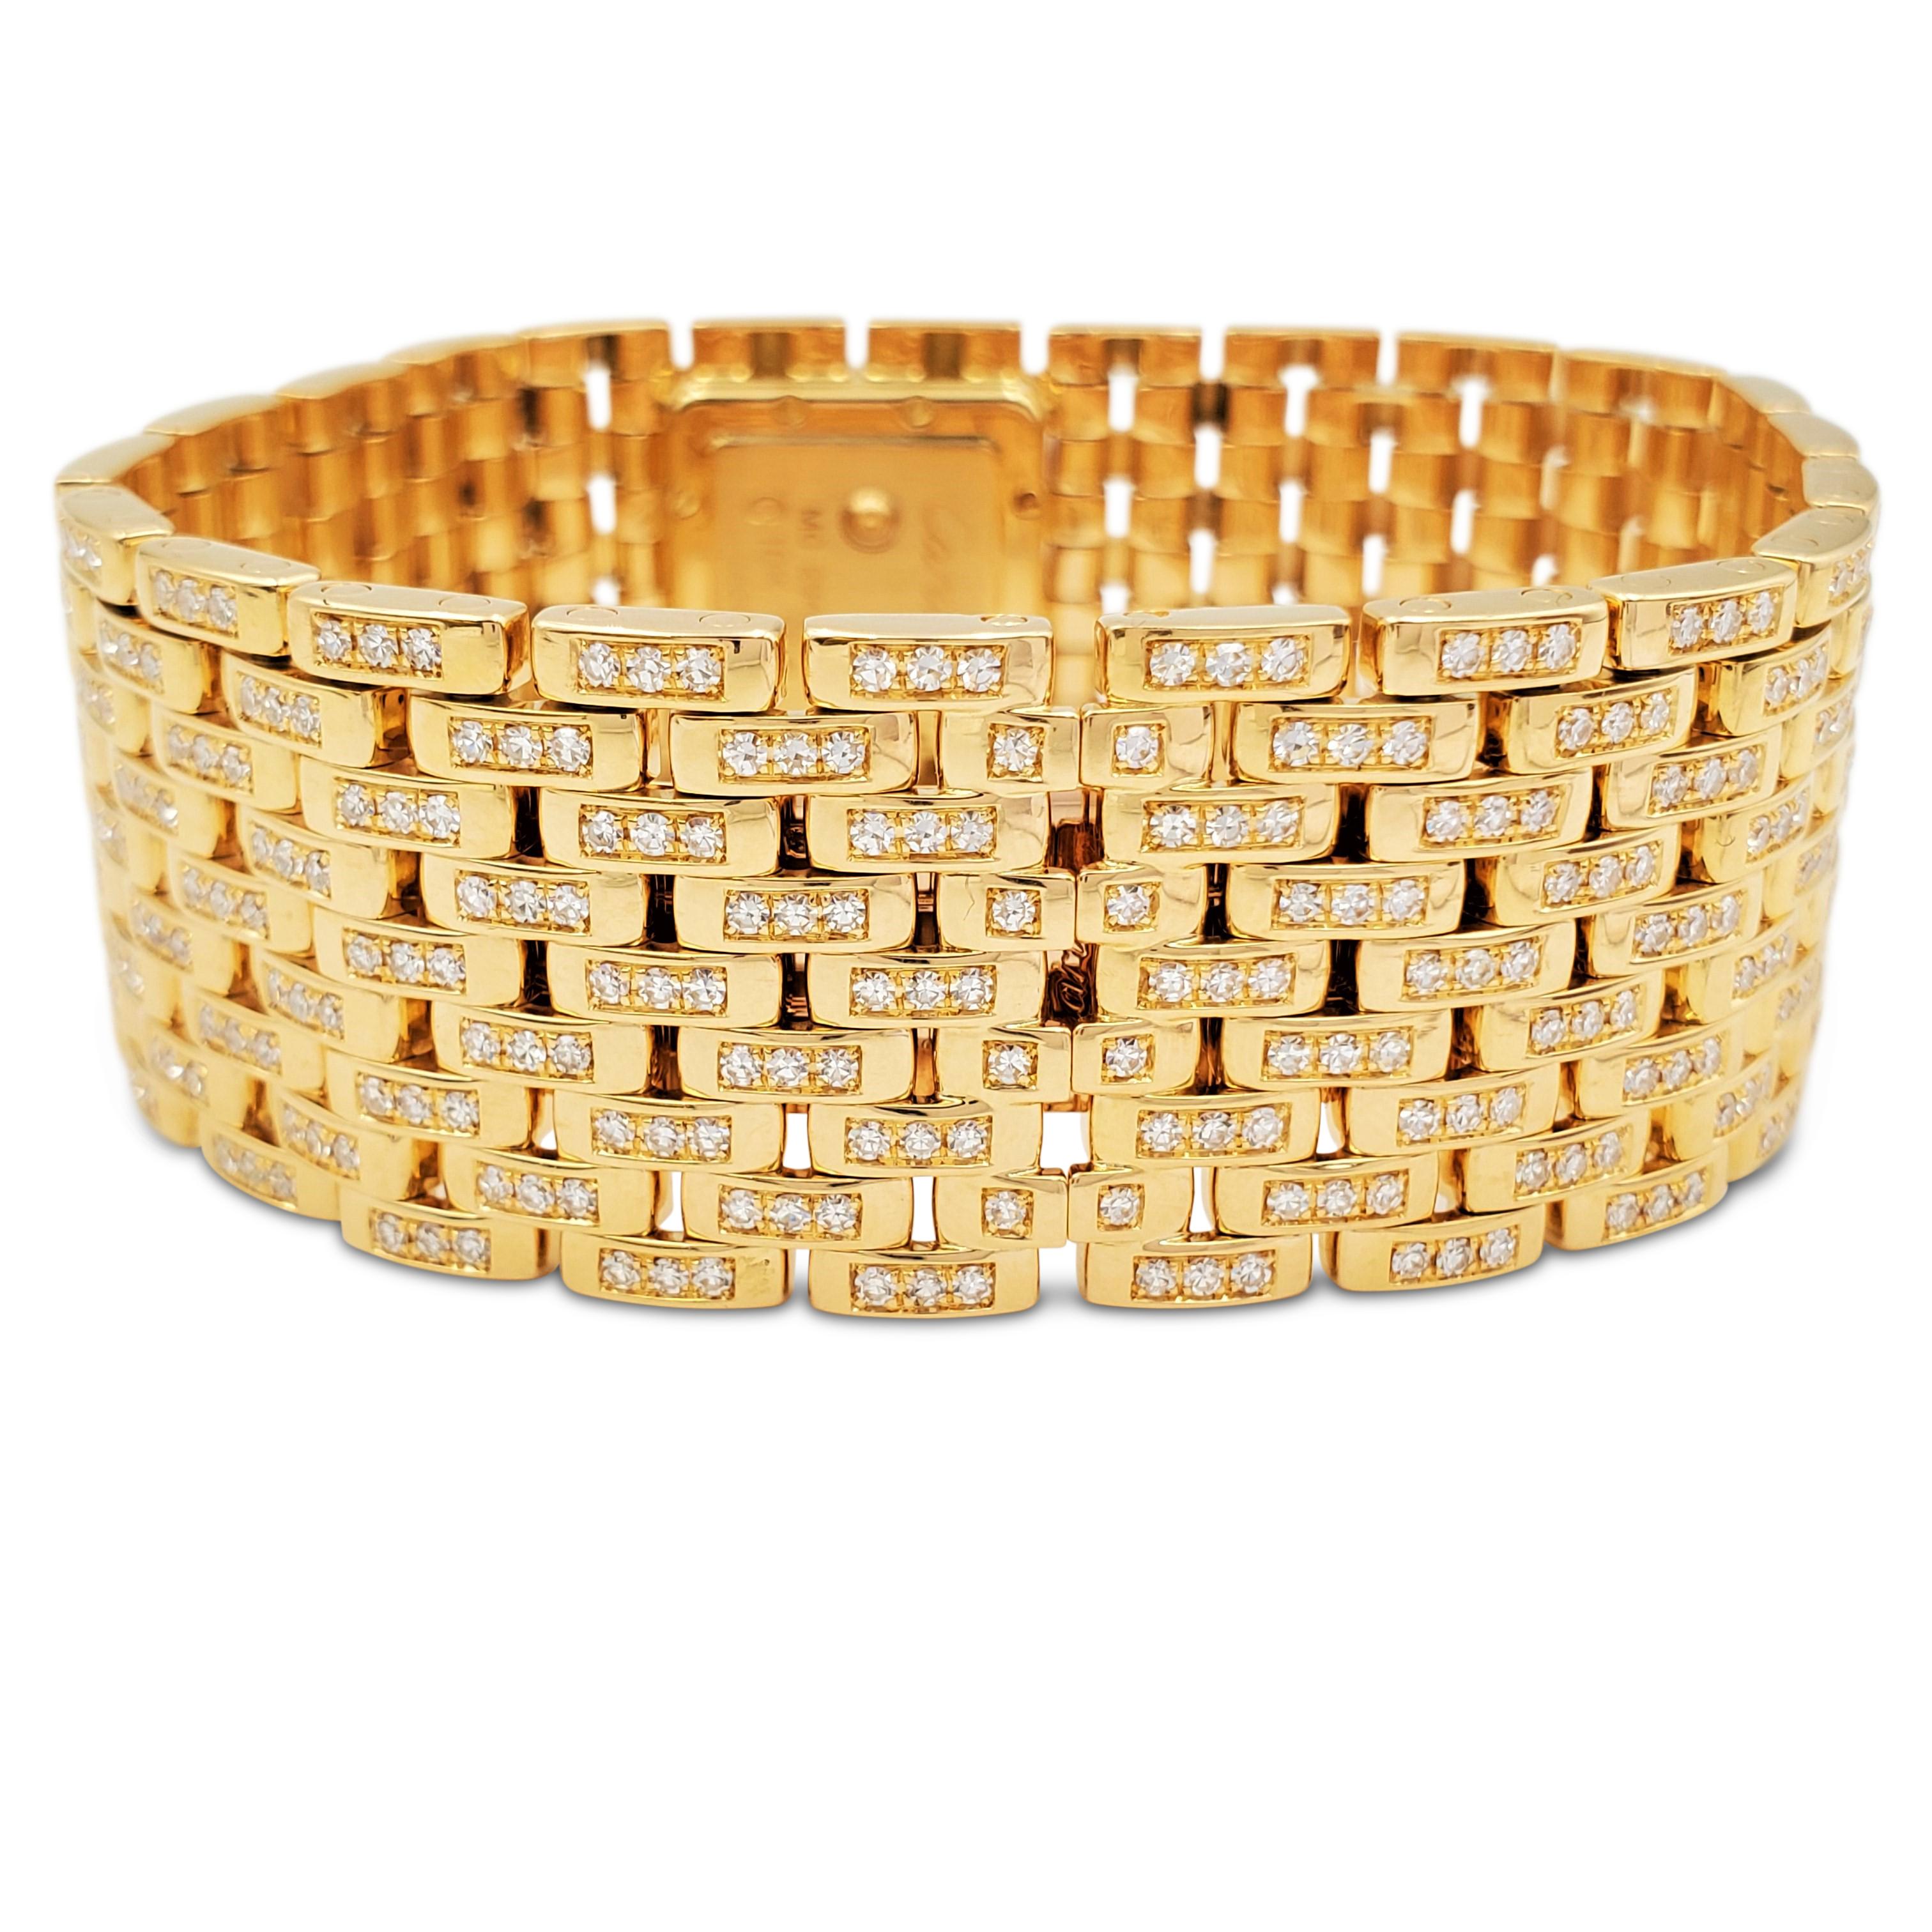 Women's Cartier Panthere Ruban Yellow Gold and Diamond Watch